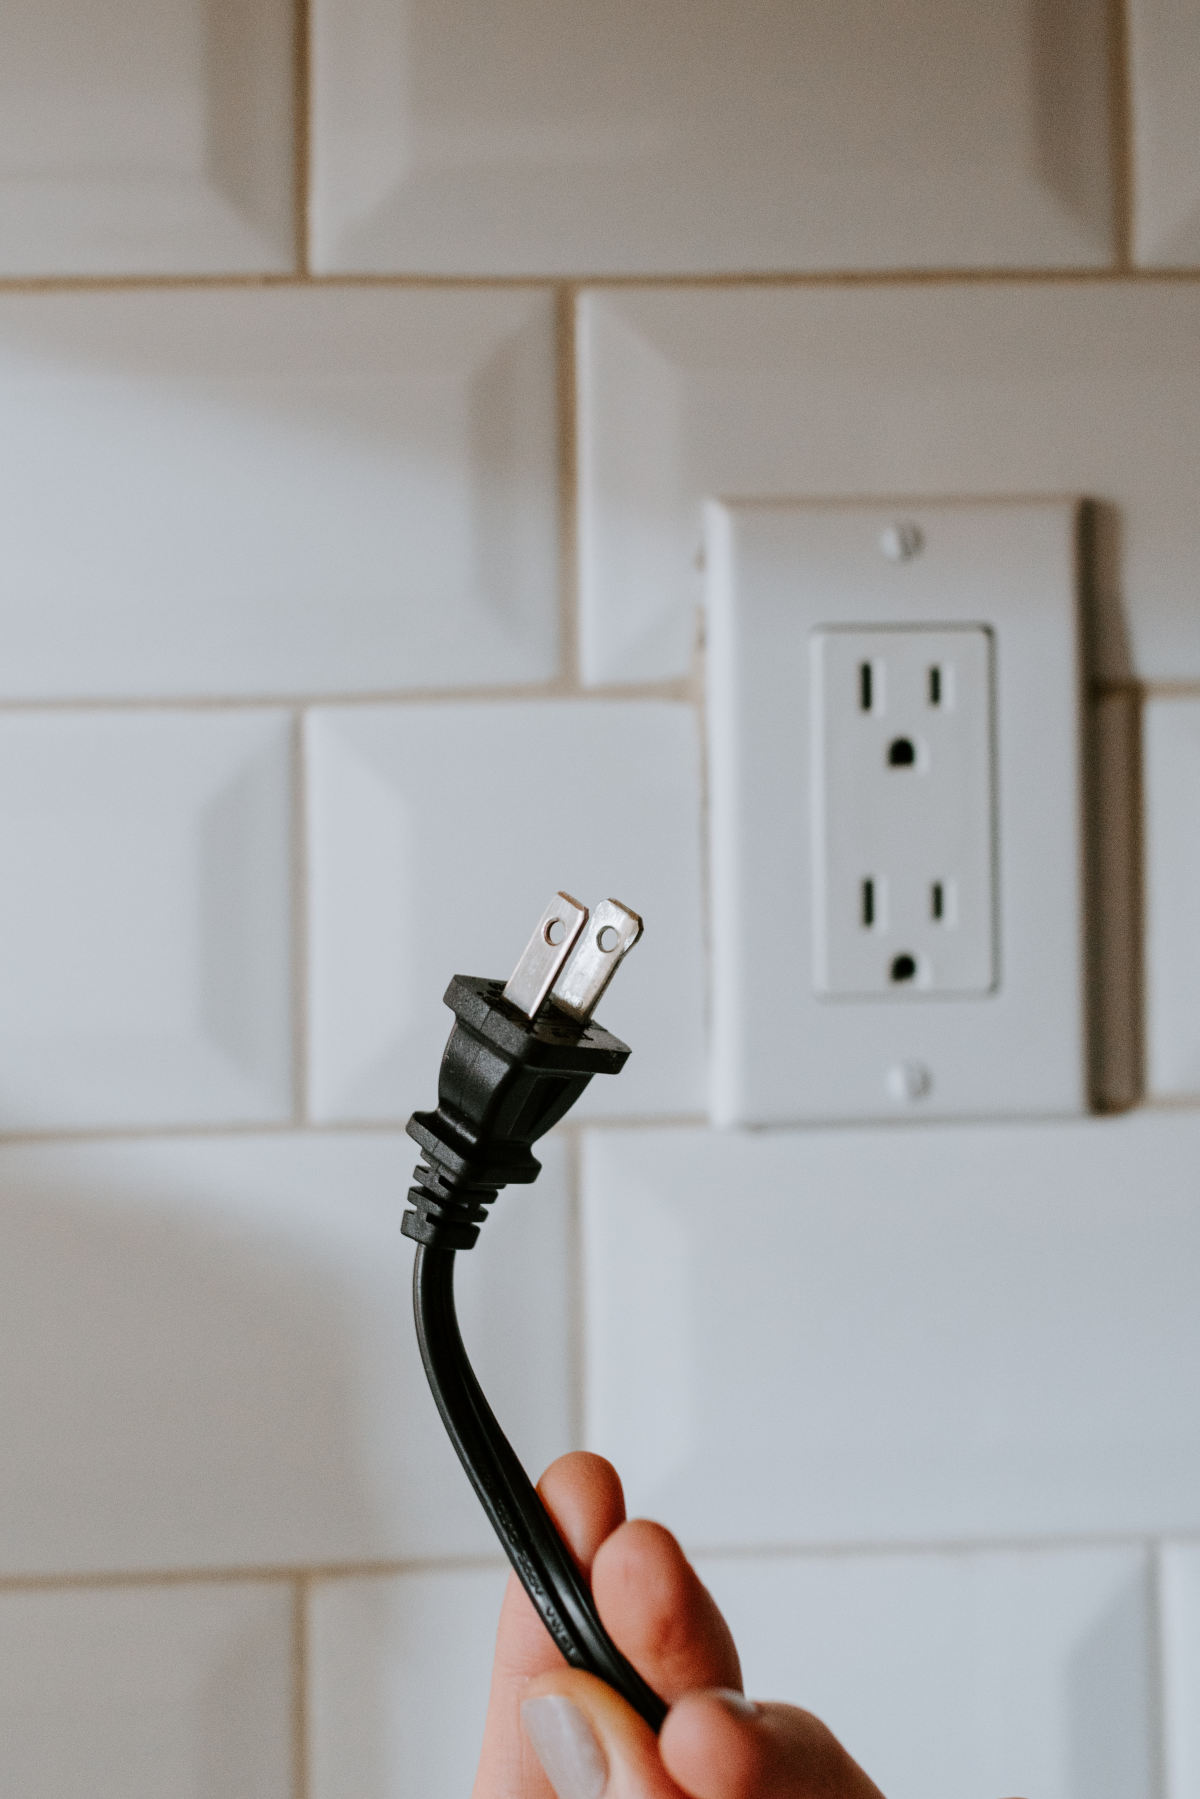 plug out of socket